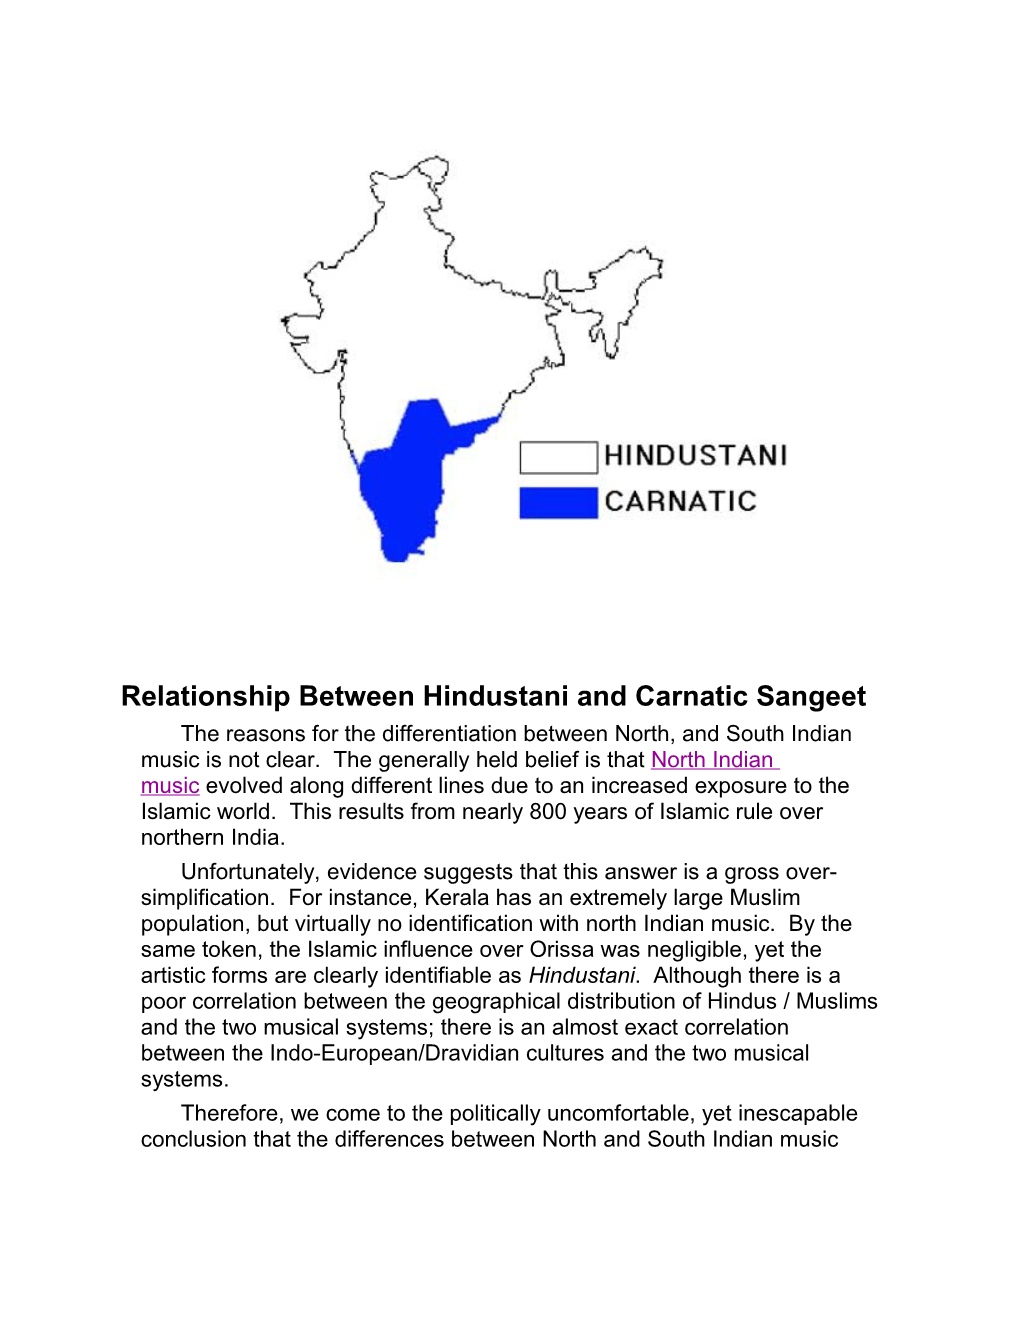 Relationship Between Hindustani and Carnatic Sangeet